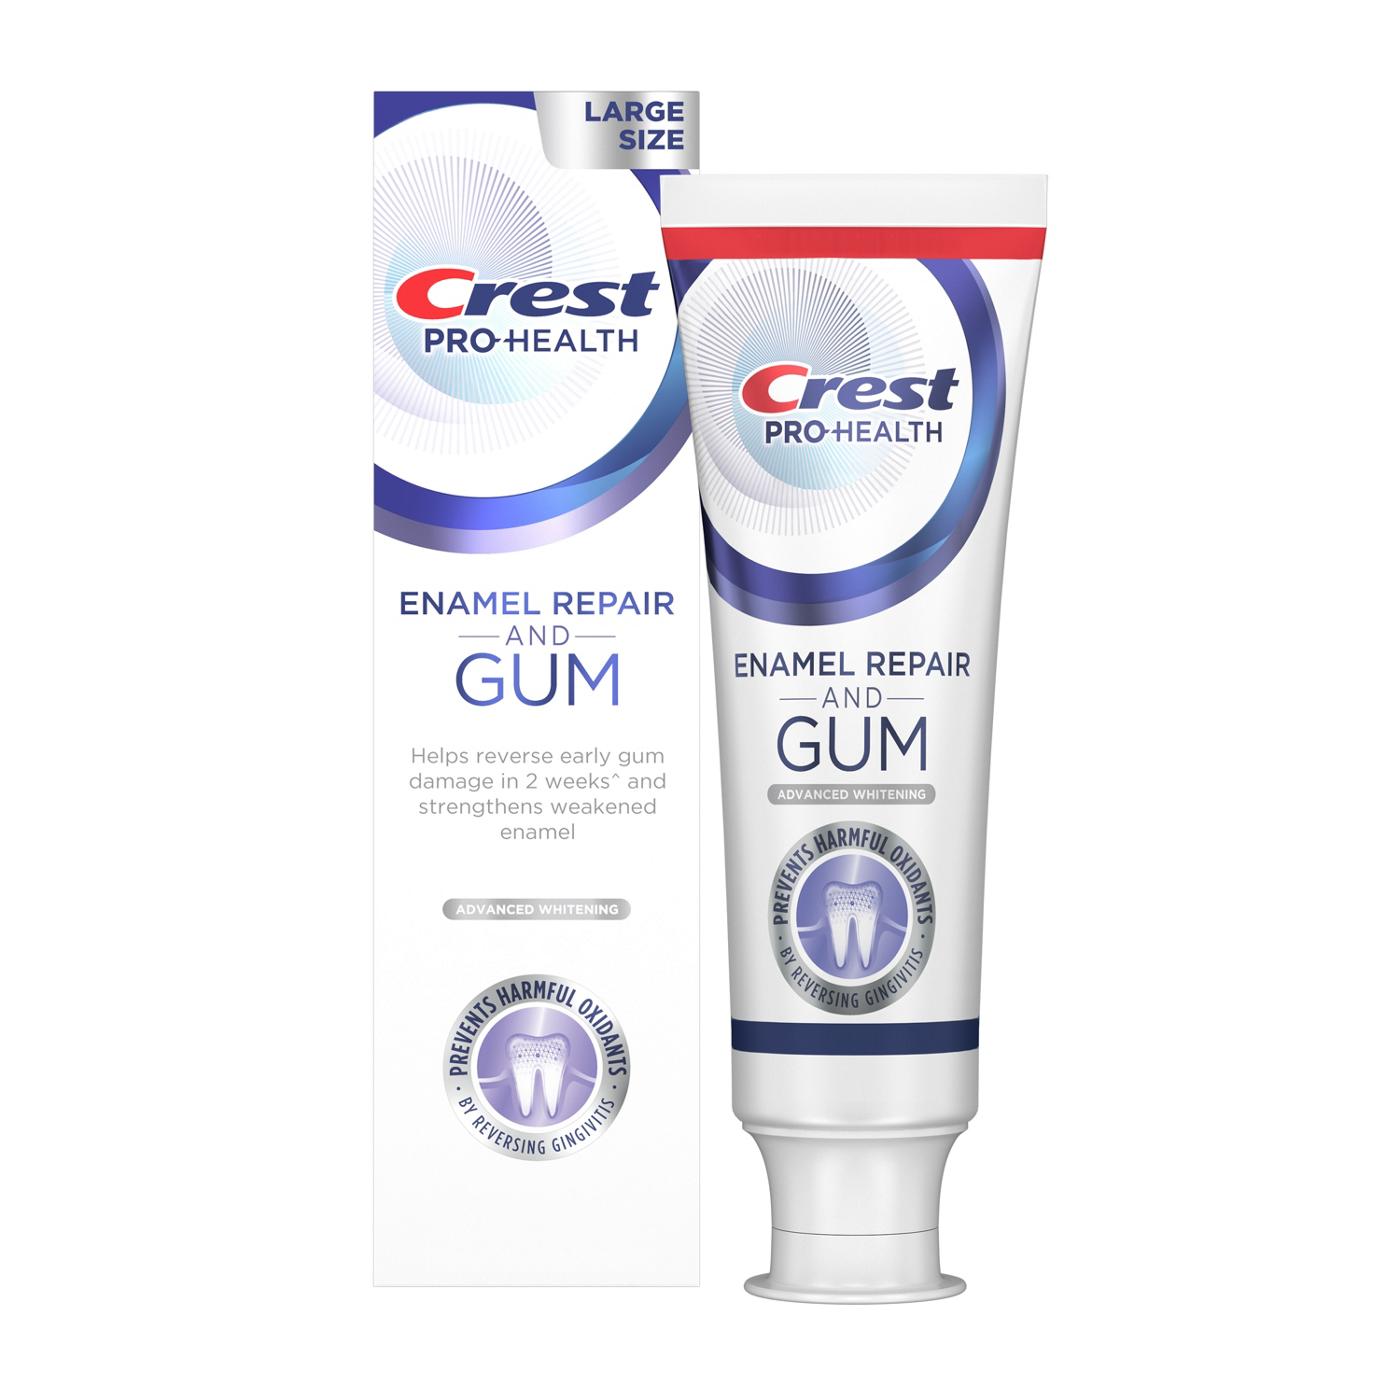 Crest Pro Health Enamel Repair & Gum Toothpaste - Advanced Whitening; image 2 of 6